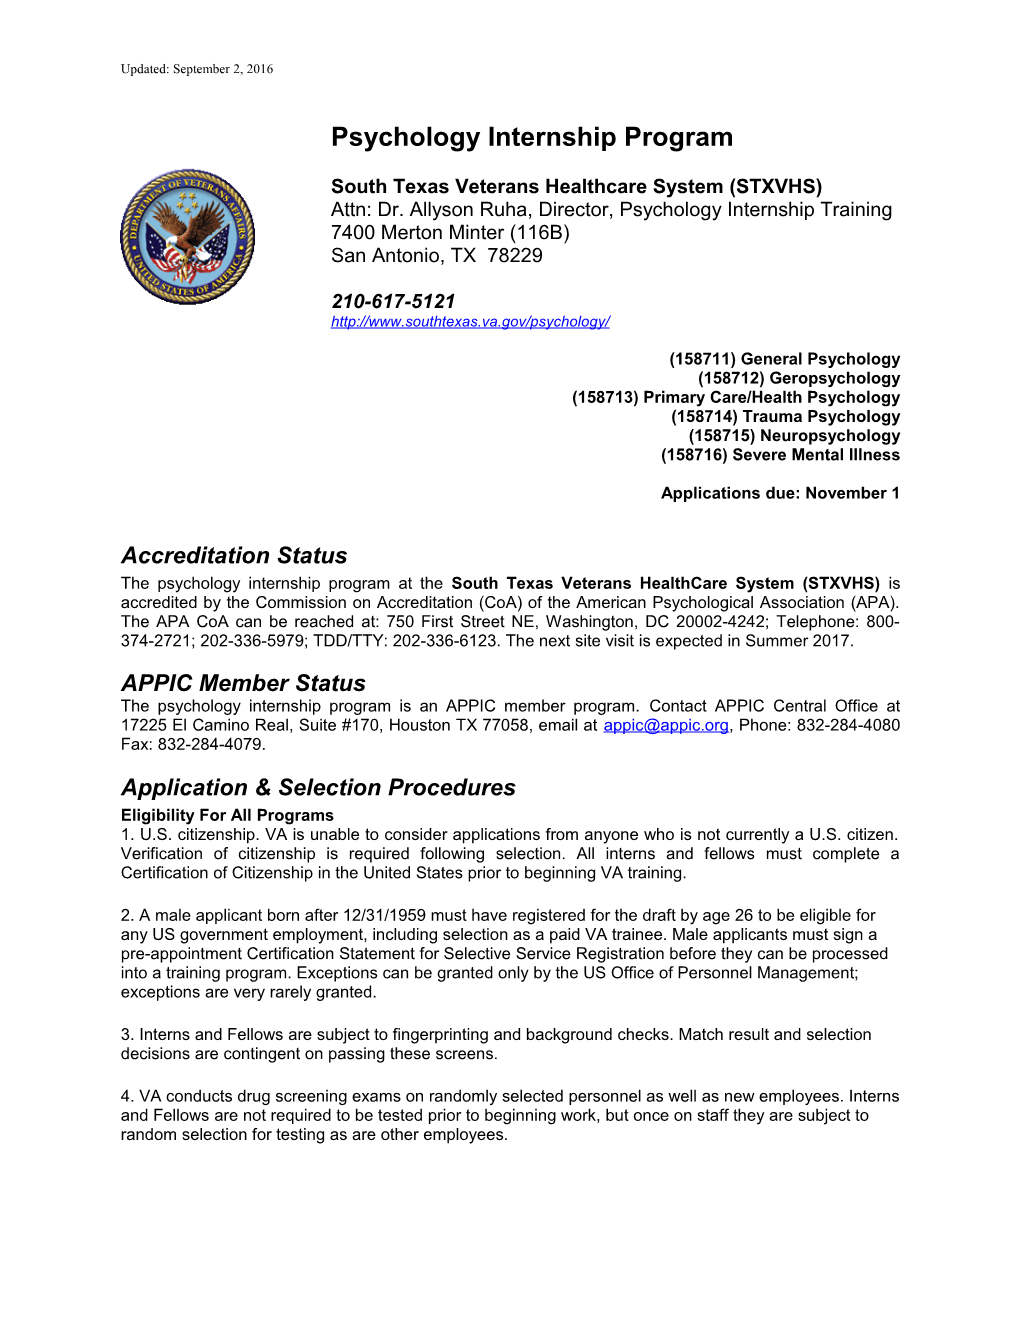 Pacific Islands Health Care System (PIHCS) - U.S. Department of Veterans Affairs